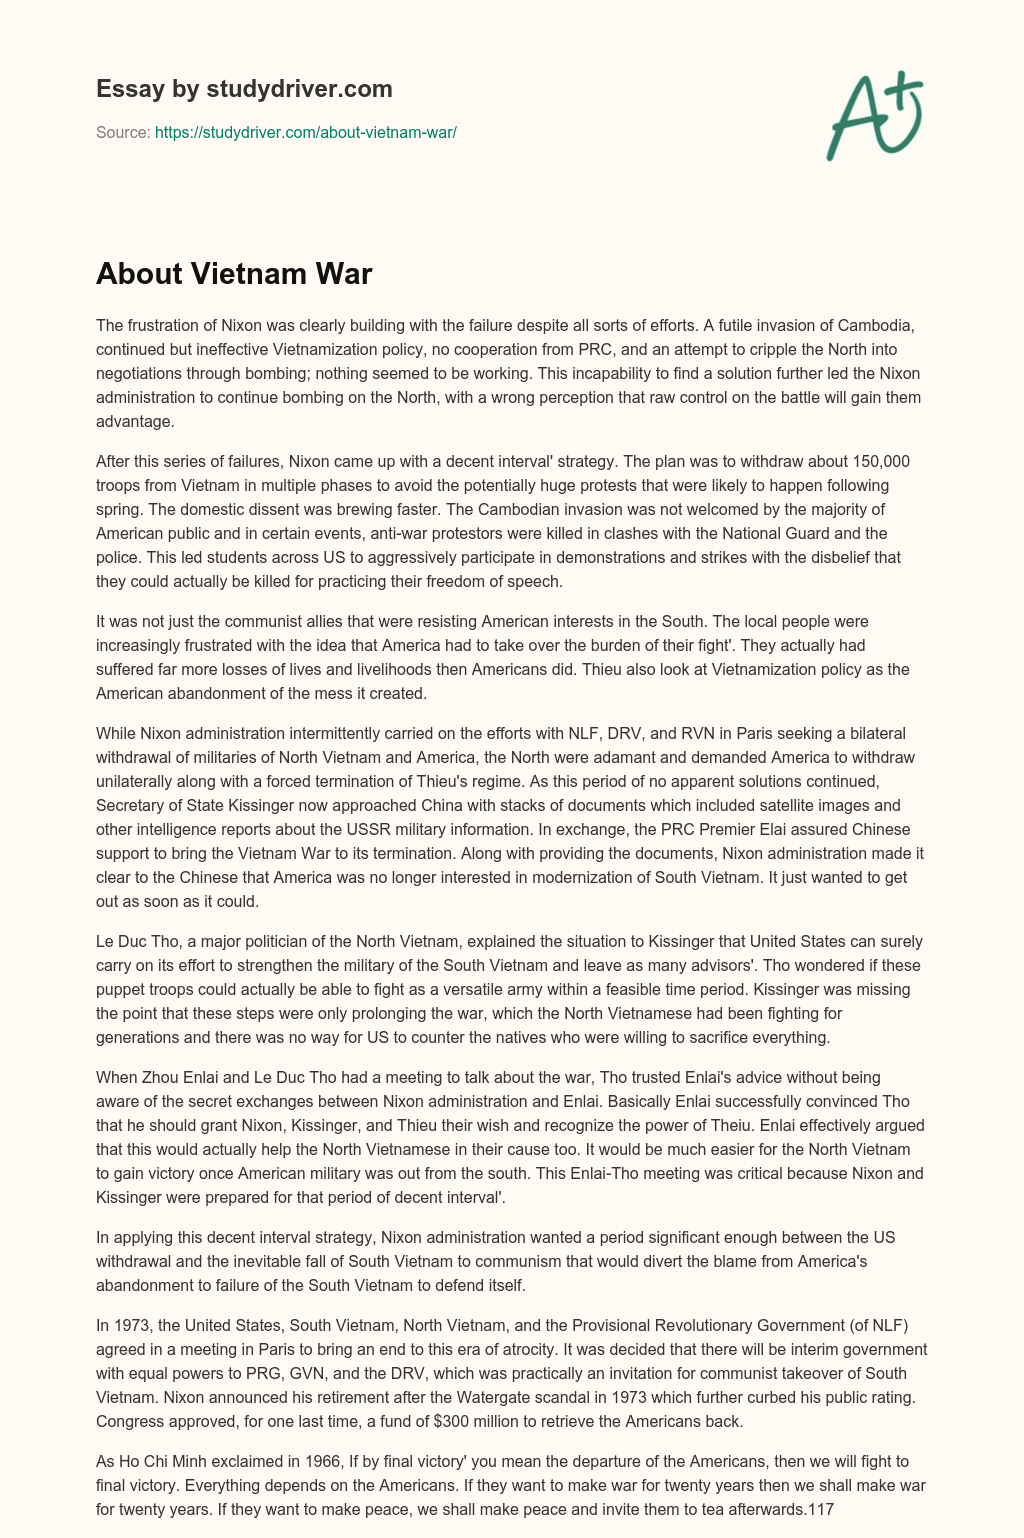 About Vietnam War essay